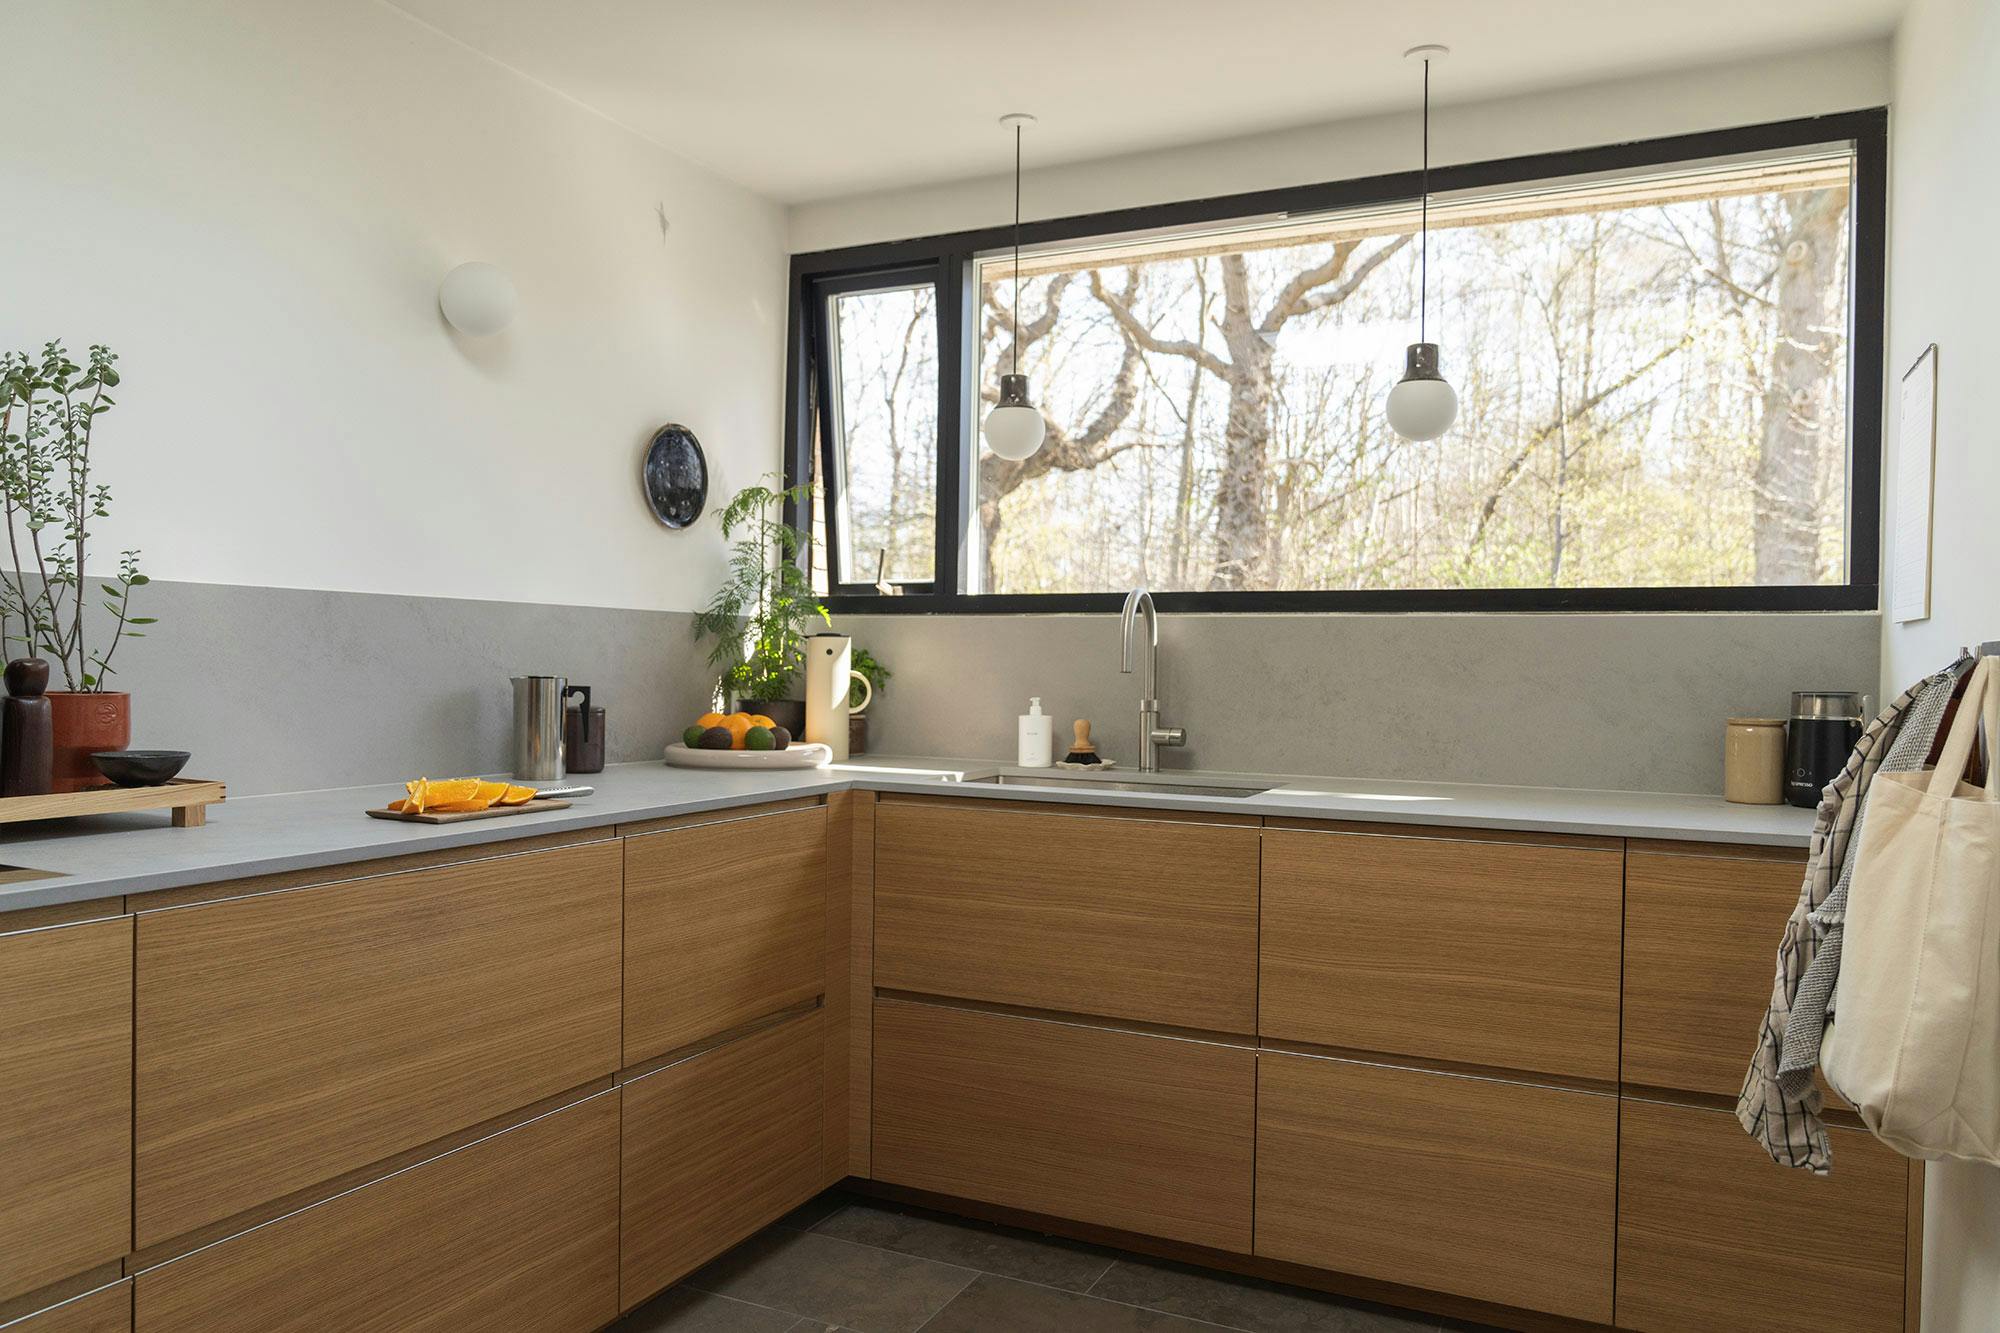 Imagem número 40 da actual secção de Dekton Arga creates an elegant atmosphere in this open plan kitchen with a minimalist approach da Cosentino Portugal